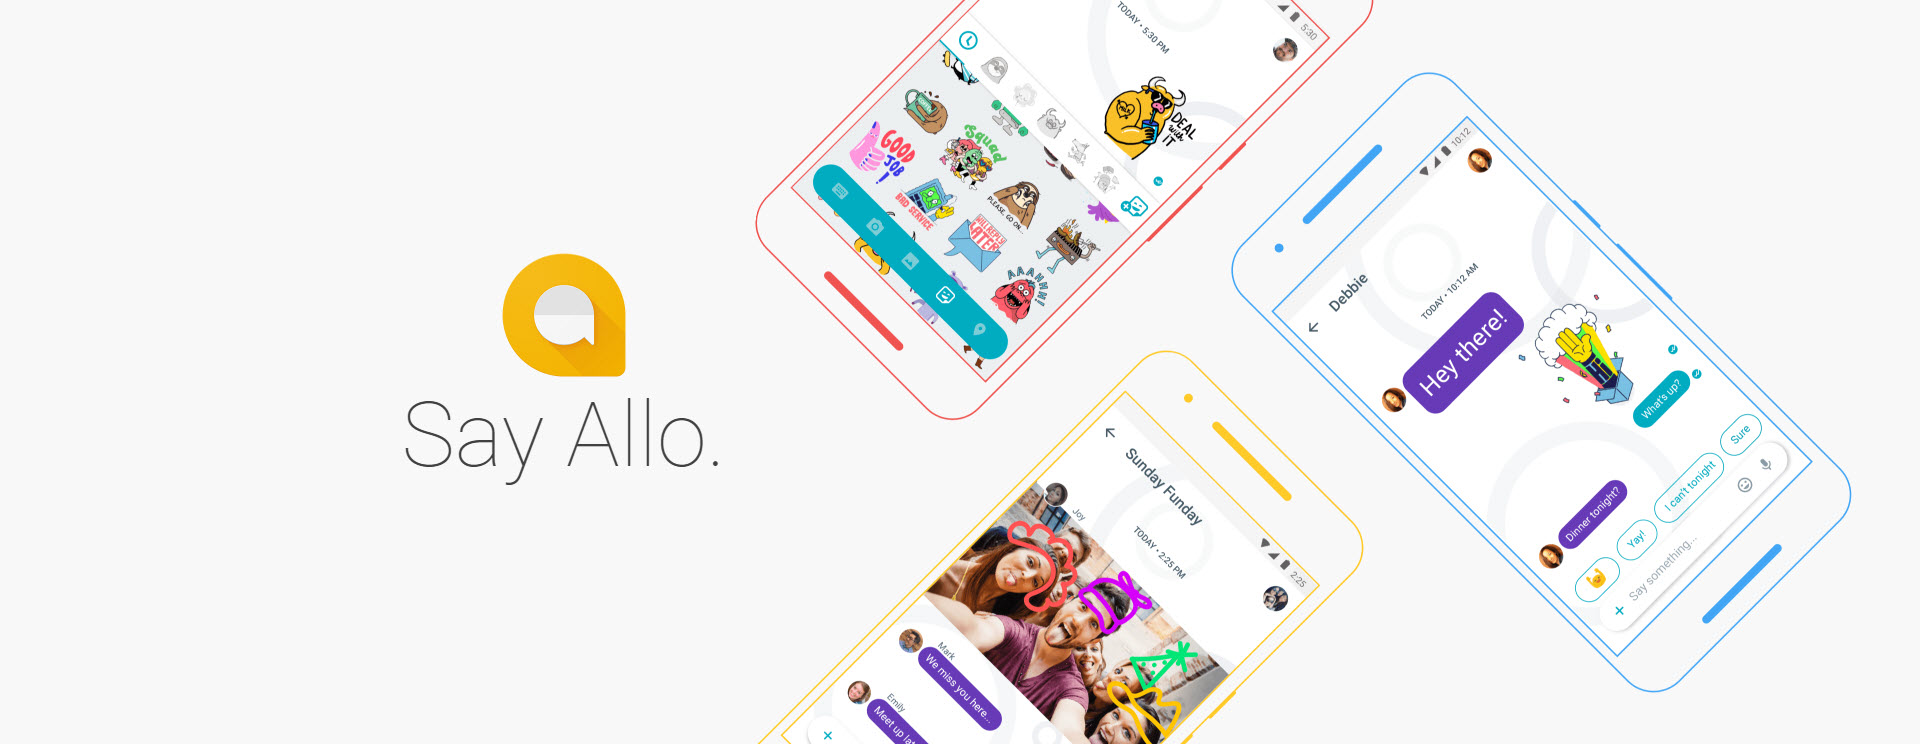 Google Allo ขึ้นแท่น Top Free อันดับ 1 ใน Play Store ภายในไม่กี่วันหลังจากเปิดให้ดาวน์โหลด